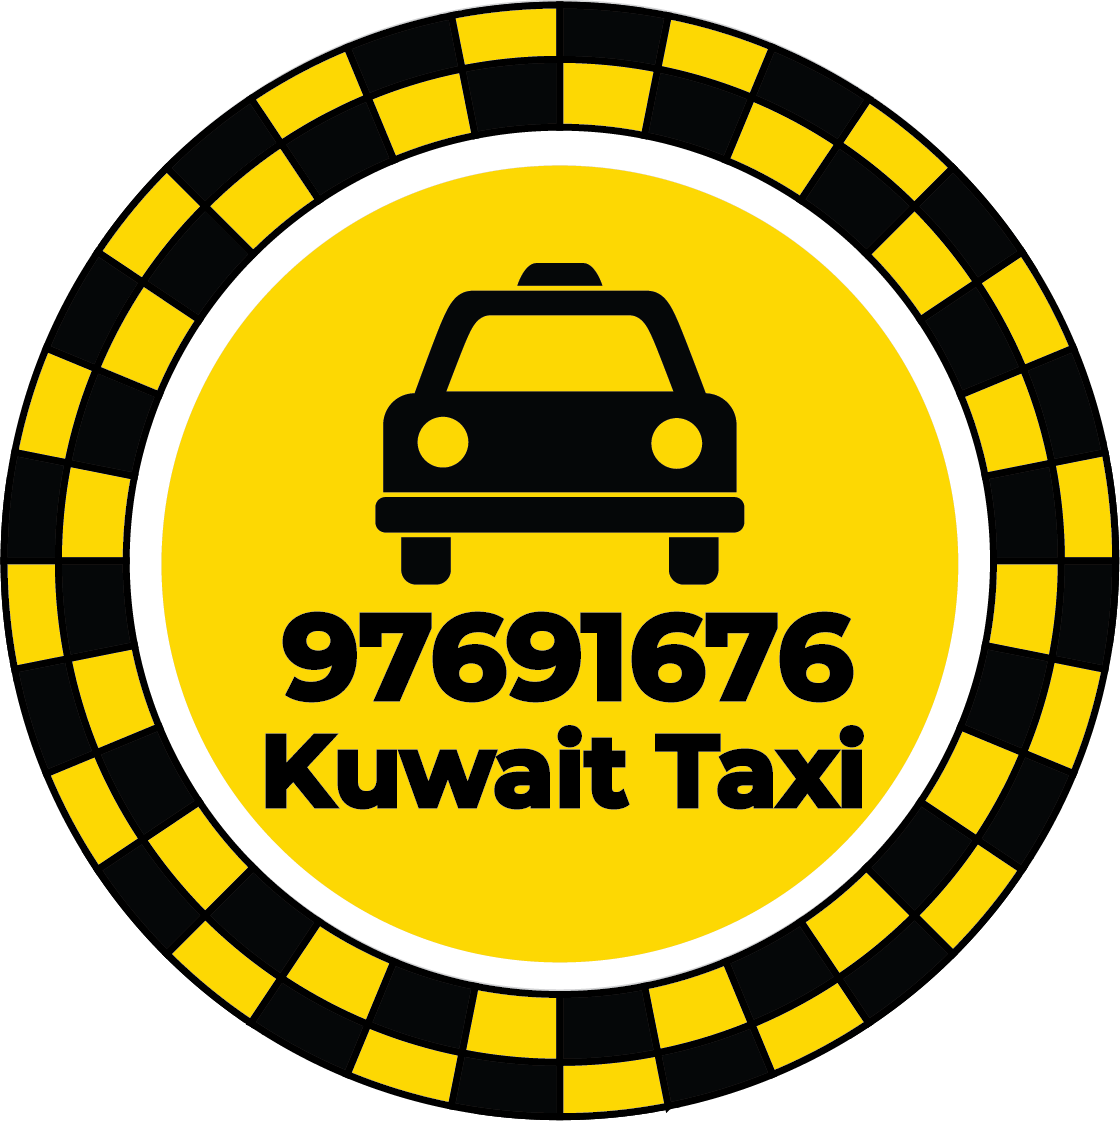 Dhajeej Taxi 97691676 - Dhajeej Taxi Number Kuwait